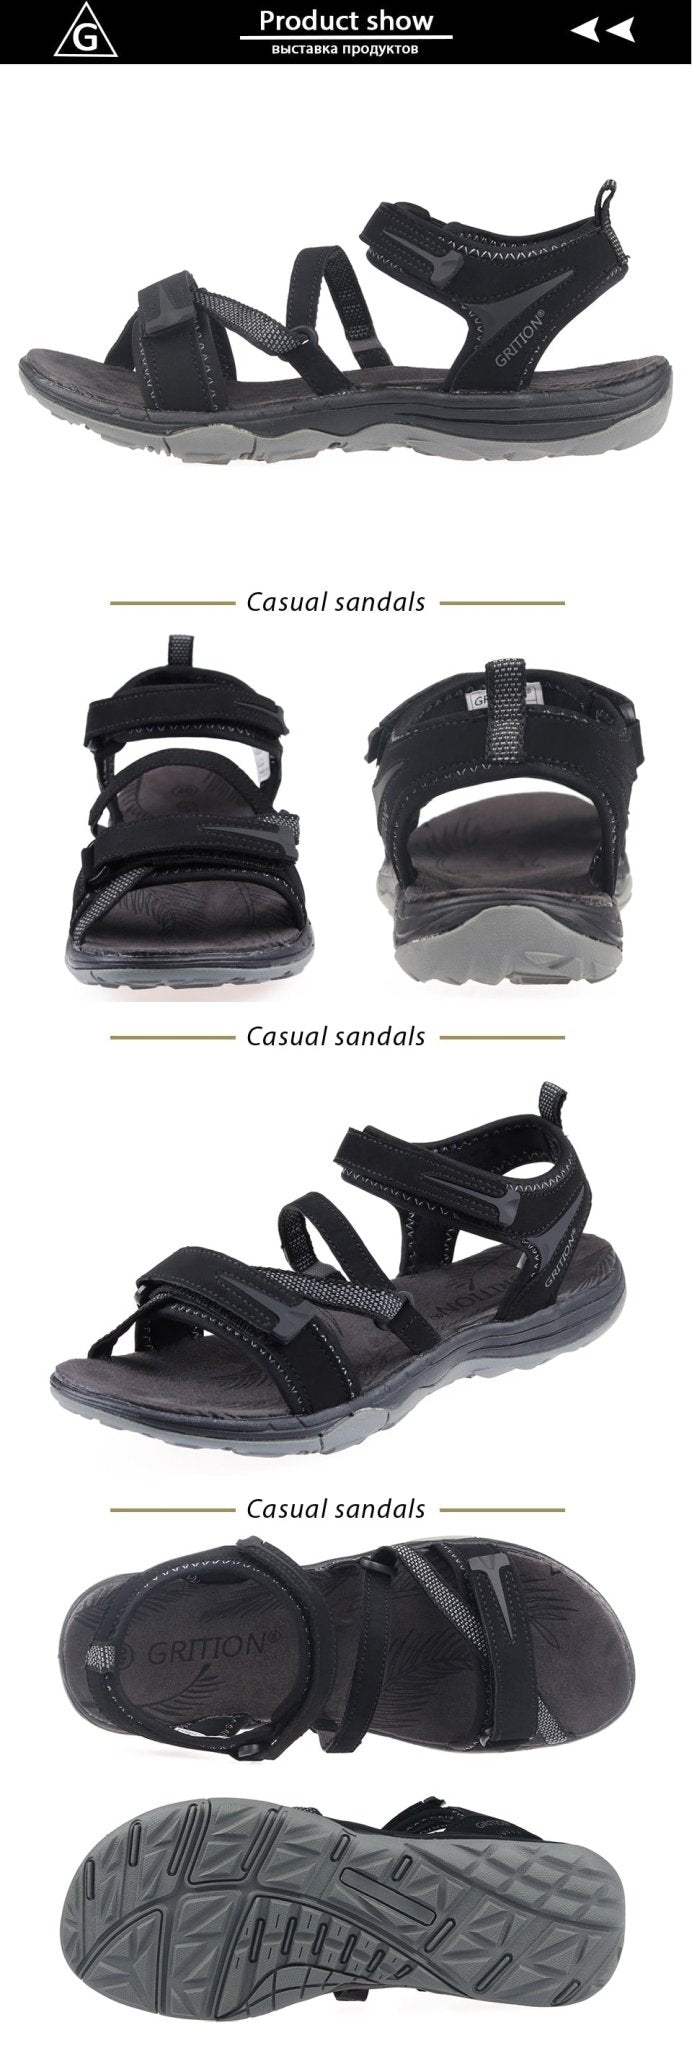 Beach Sandals Women Summer Outdoor Flat Sandals Ladies Open Toe Shoes Lightweight Breathable Walking Hiking Sandals-28